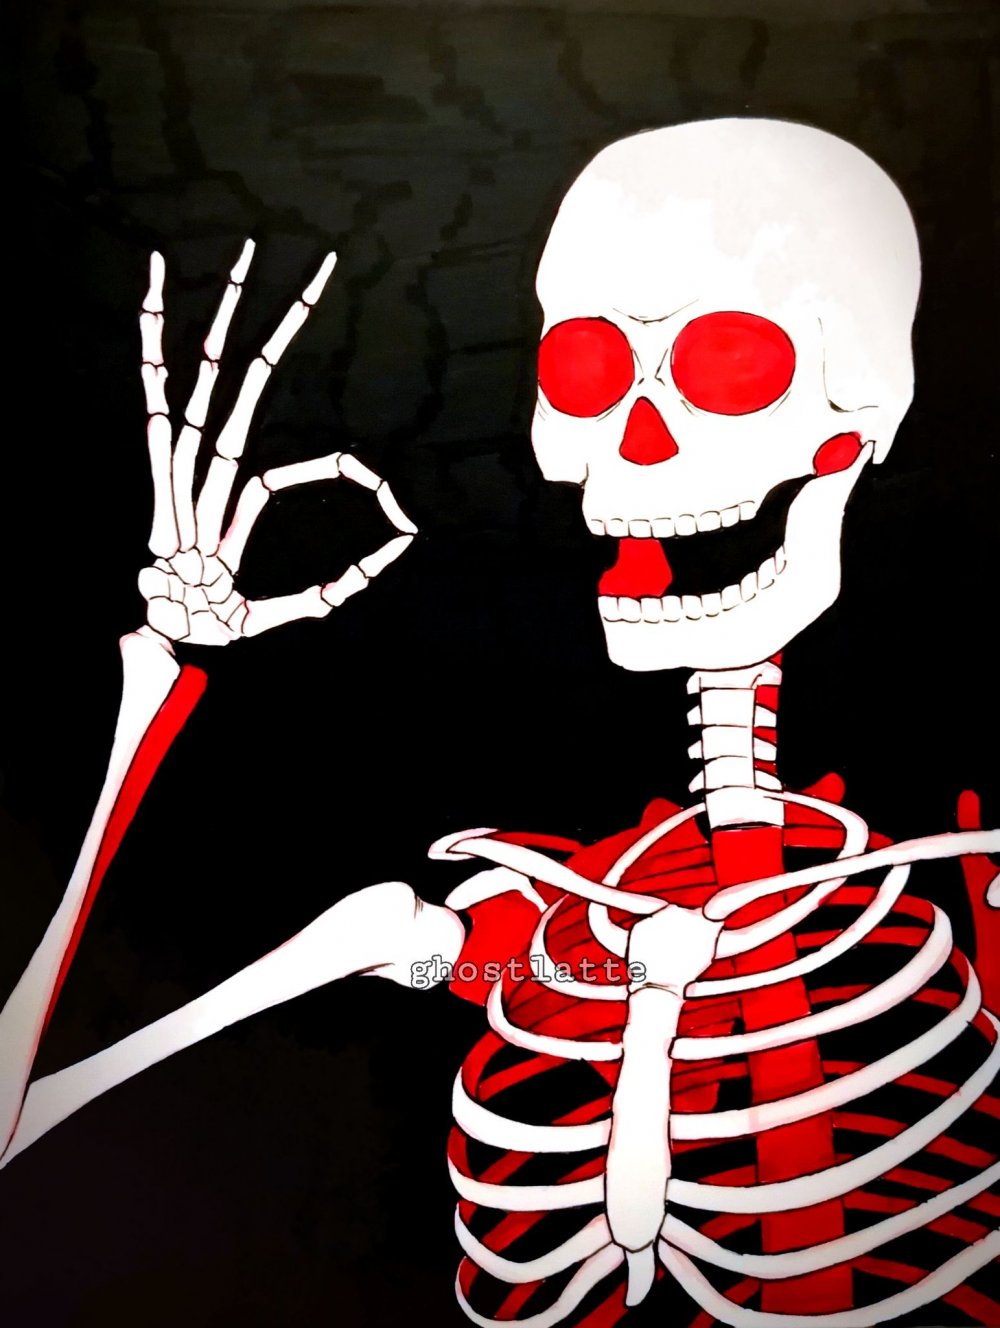 Страдающий скелет. СПУКИ скелет скелетон. СПУКИ скэри скелетон скелеты. СПУКИ скери скелетон Spooky Scary Skeleton.